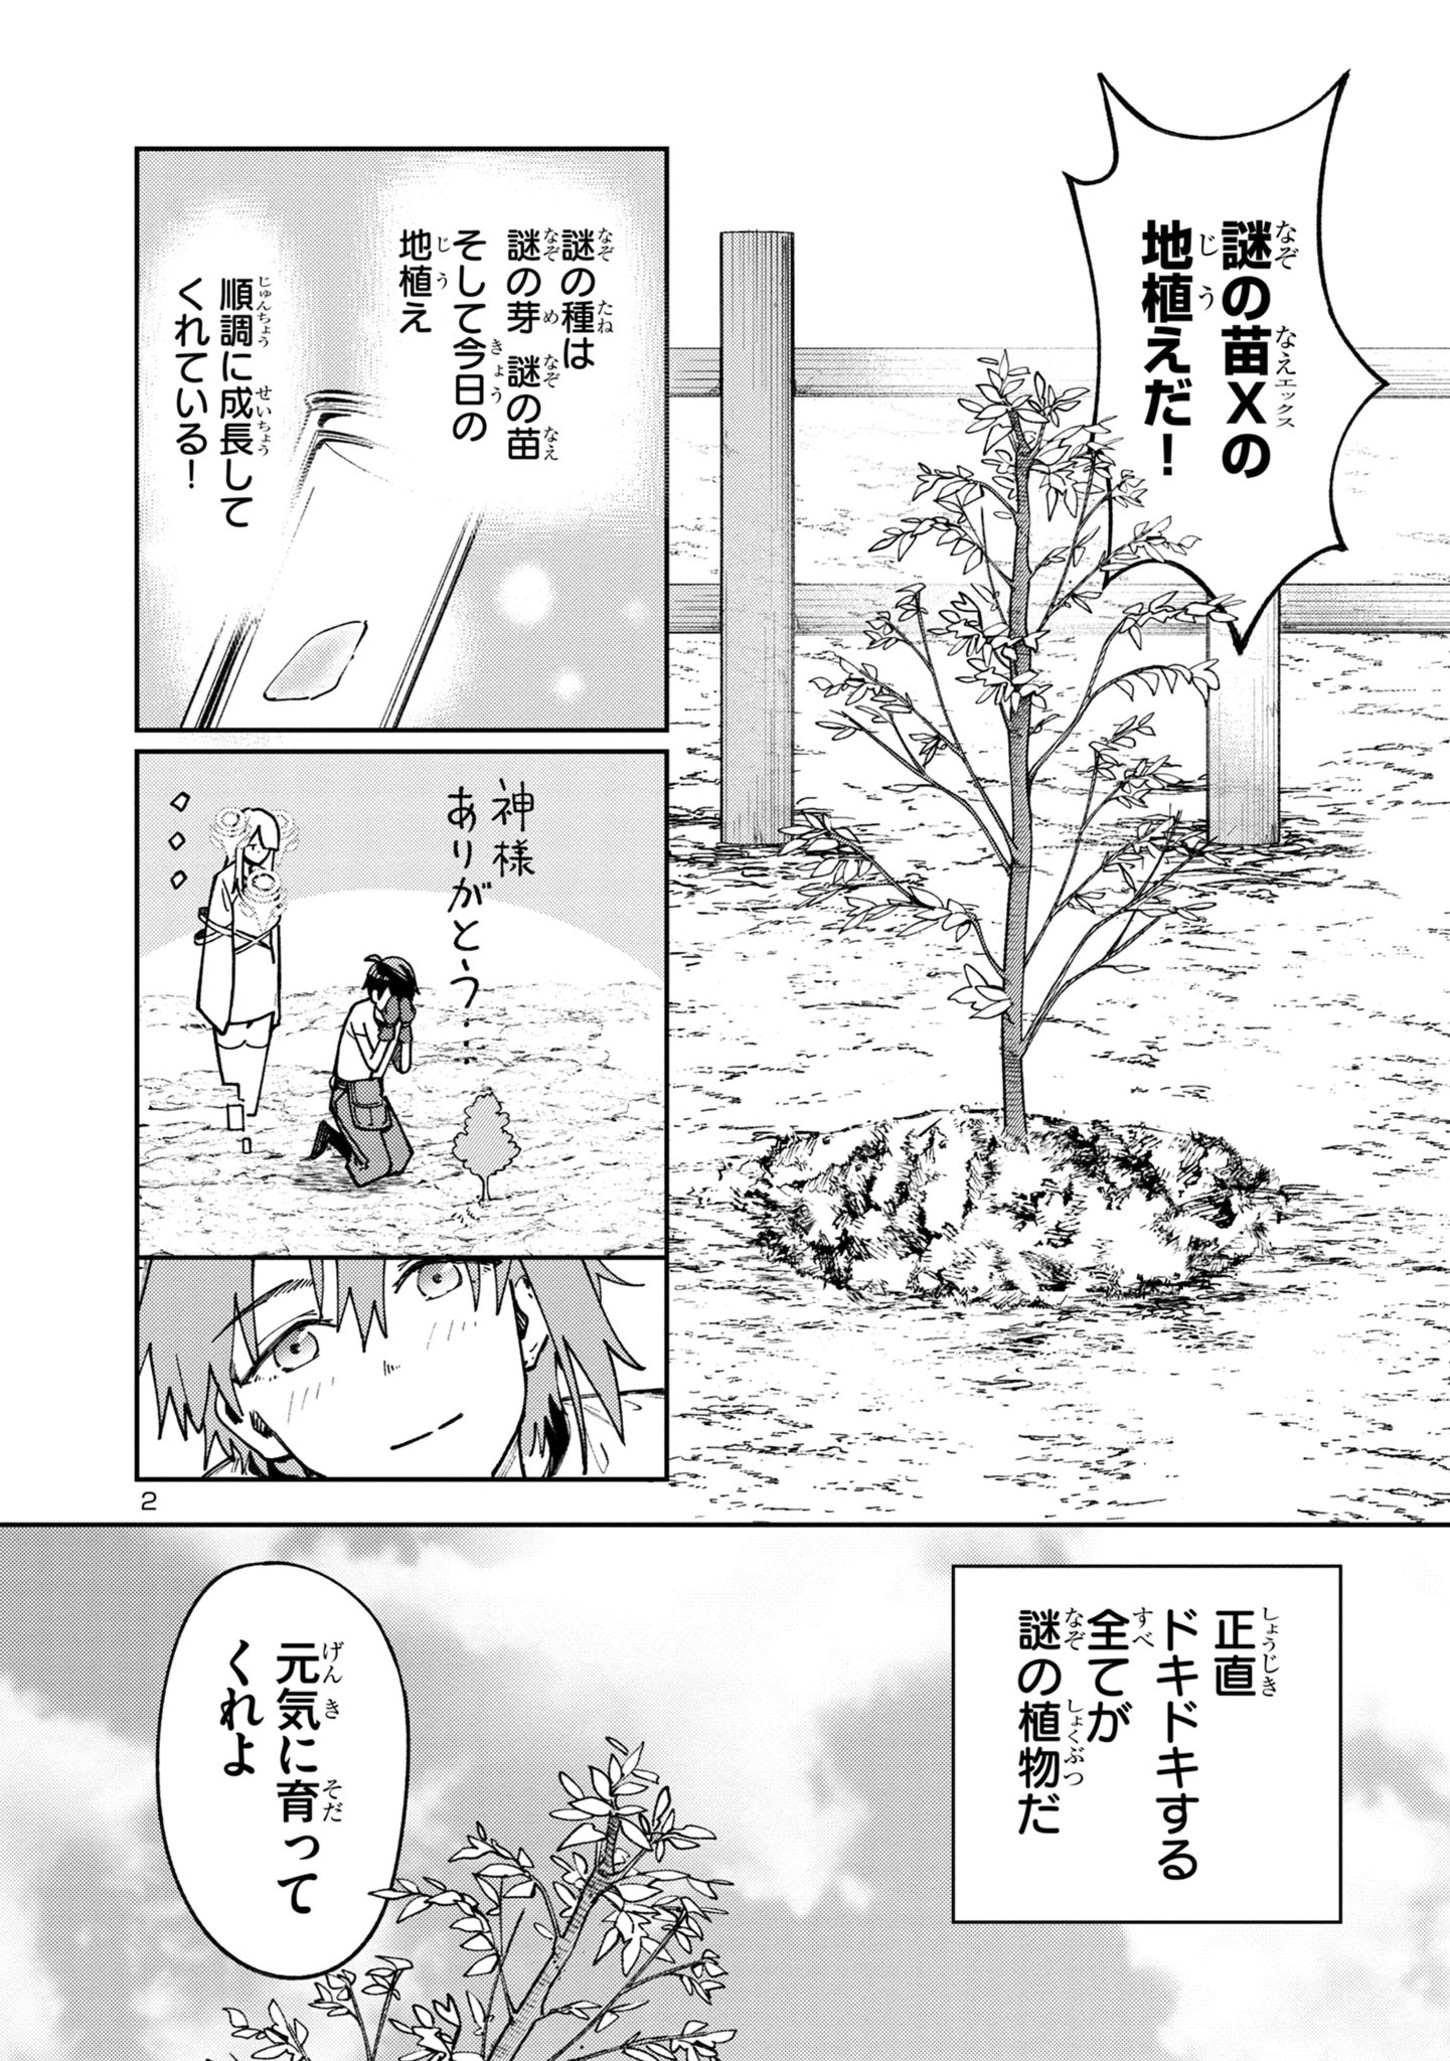 Kyuutei wo Kubi ni natta Shokubutsu Madoushi wa Slow Life wo Ouka suru - Chapter 9.1 - Page 2